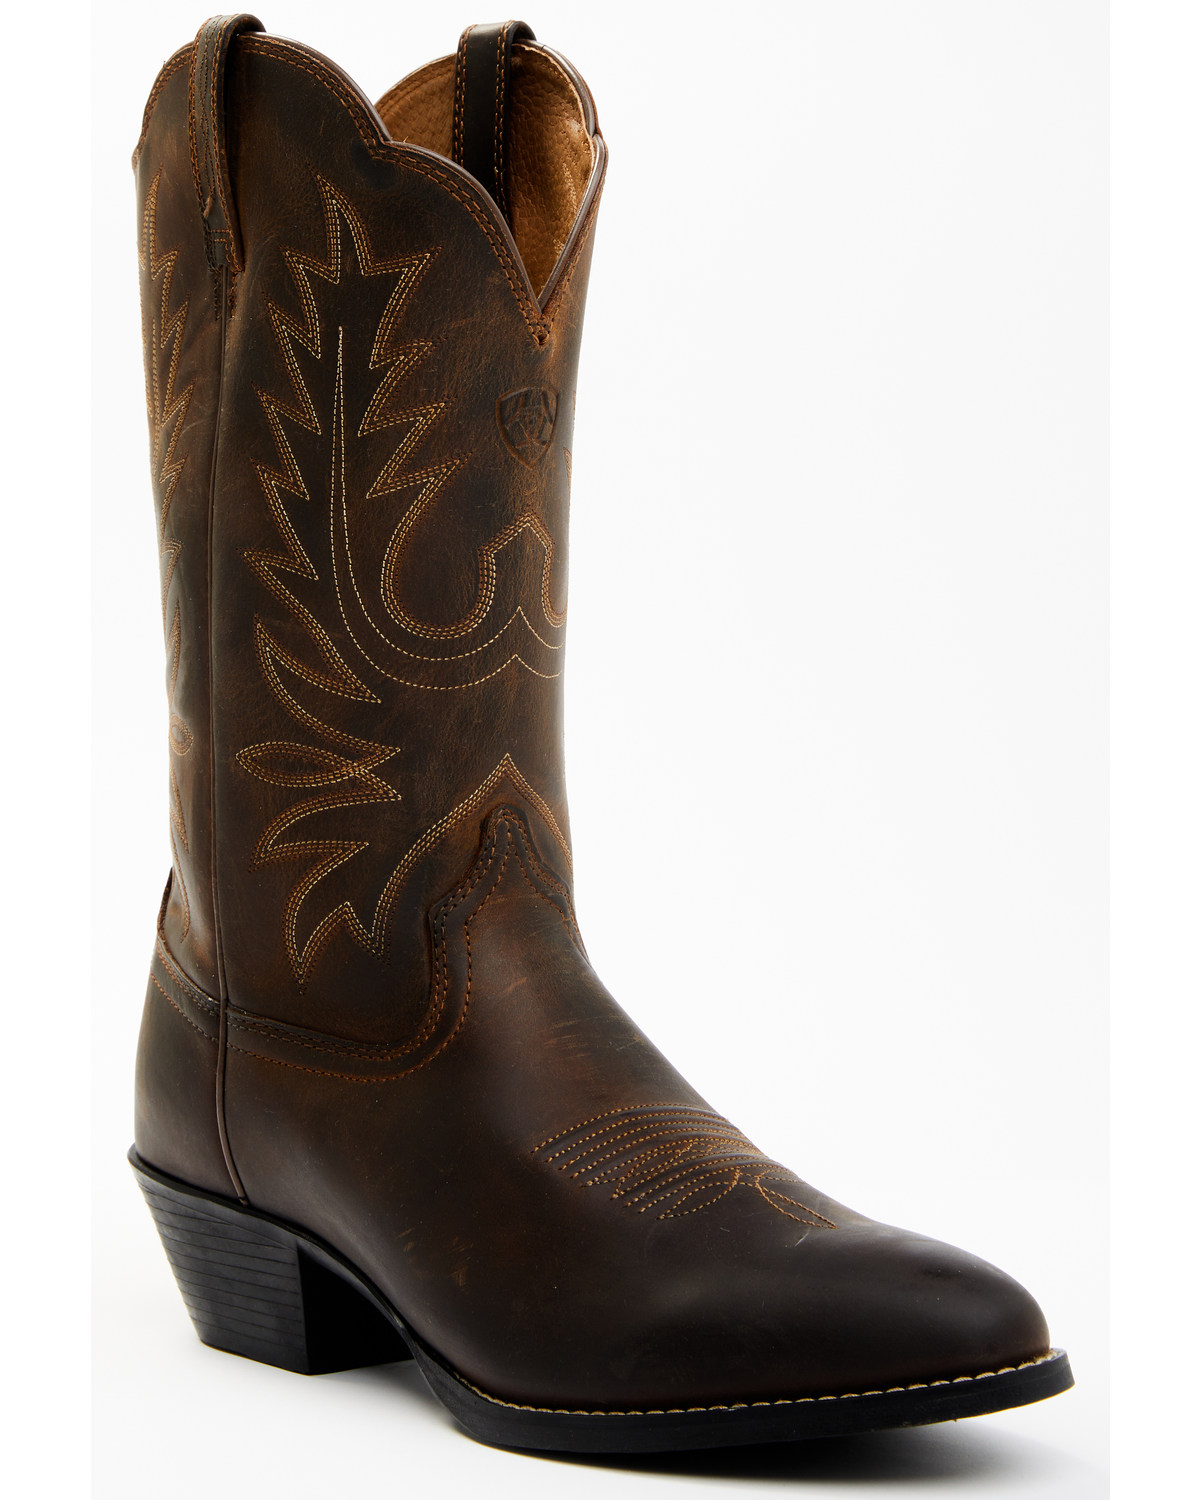 Ariat Women's Heritage Western Boots - Round Toe